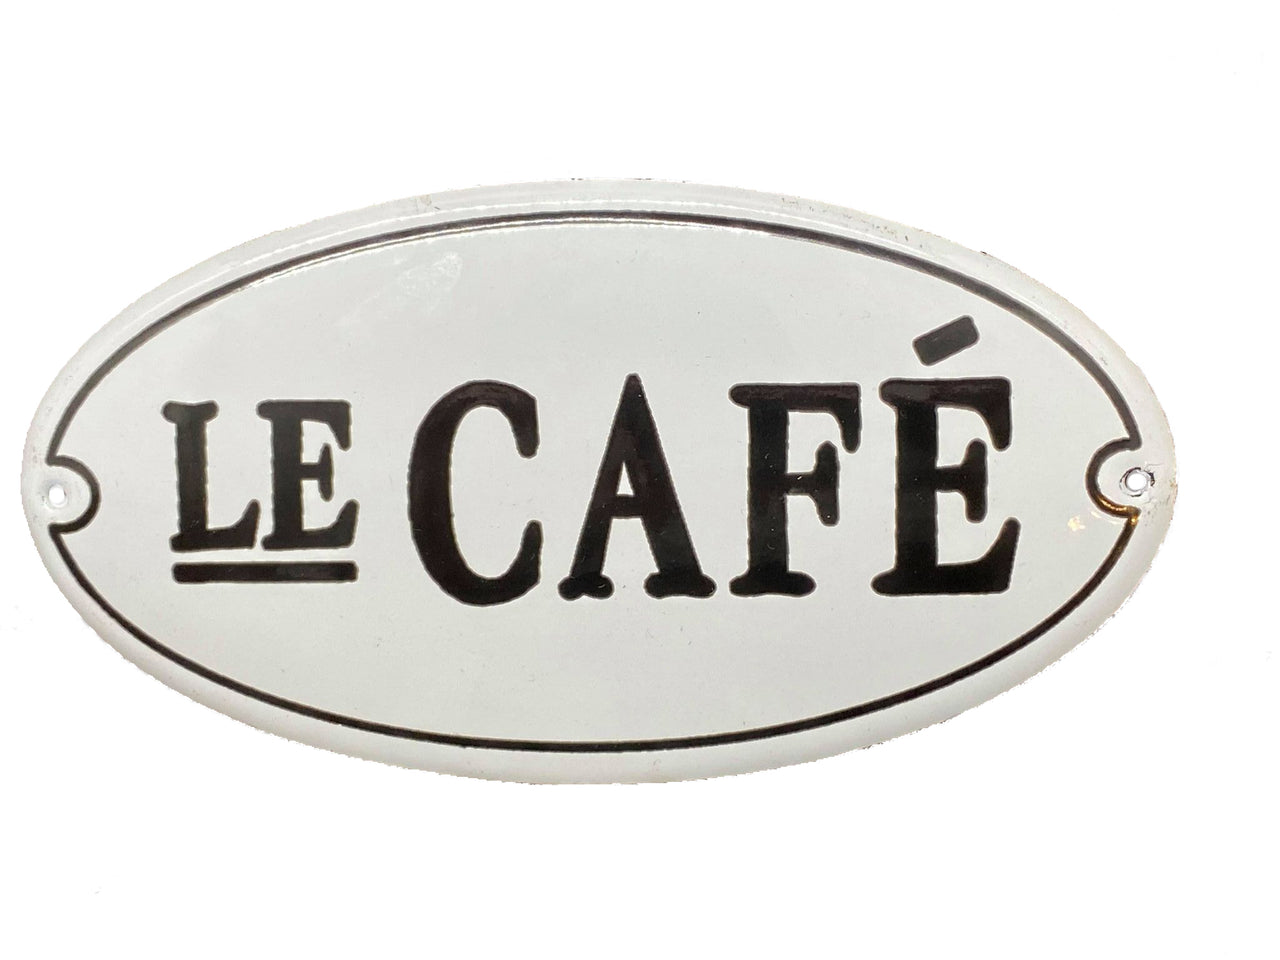 Vintage Le Cafe Sign French Porcelain Oval Enamel Charming Reproduction